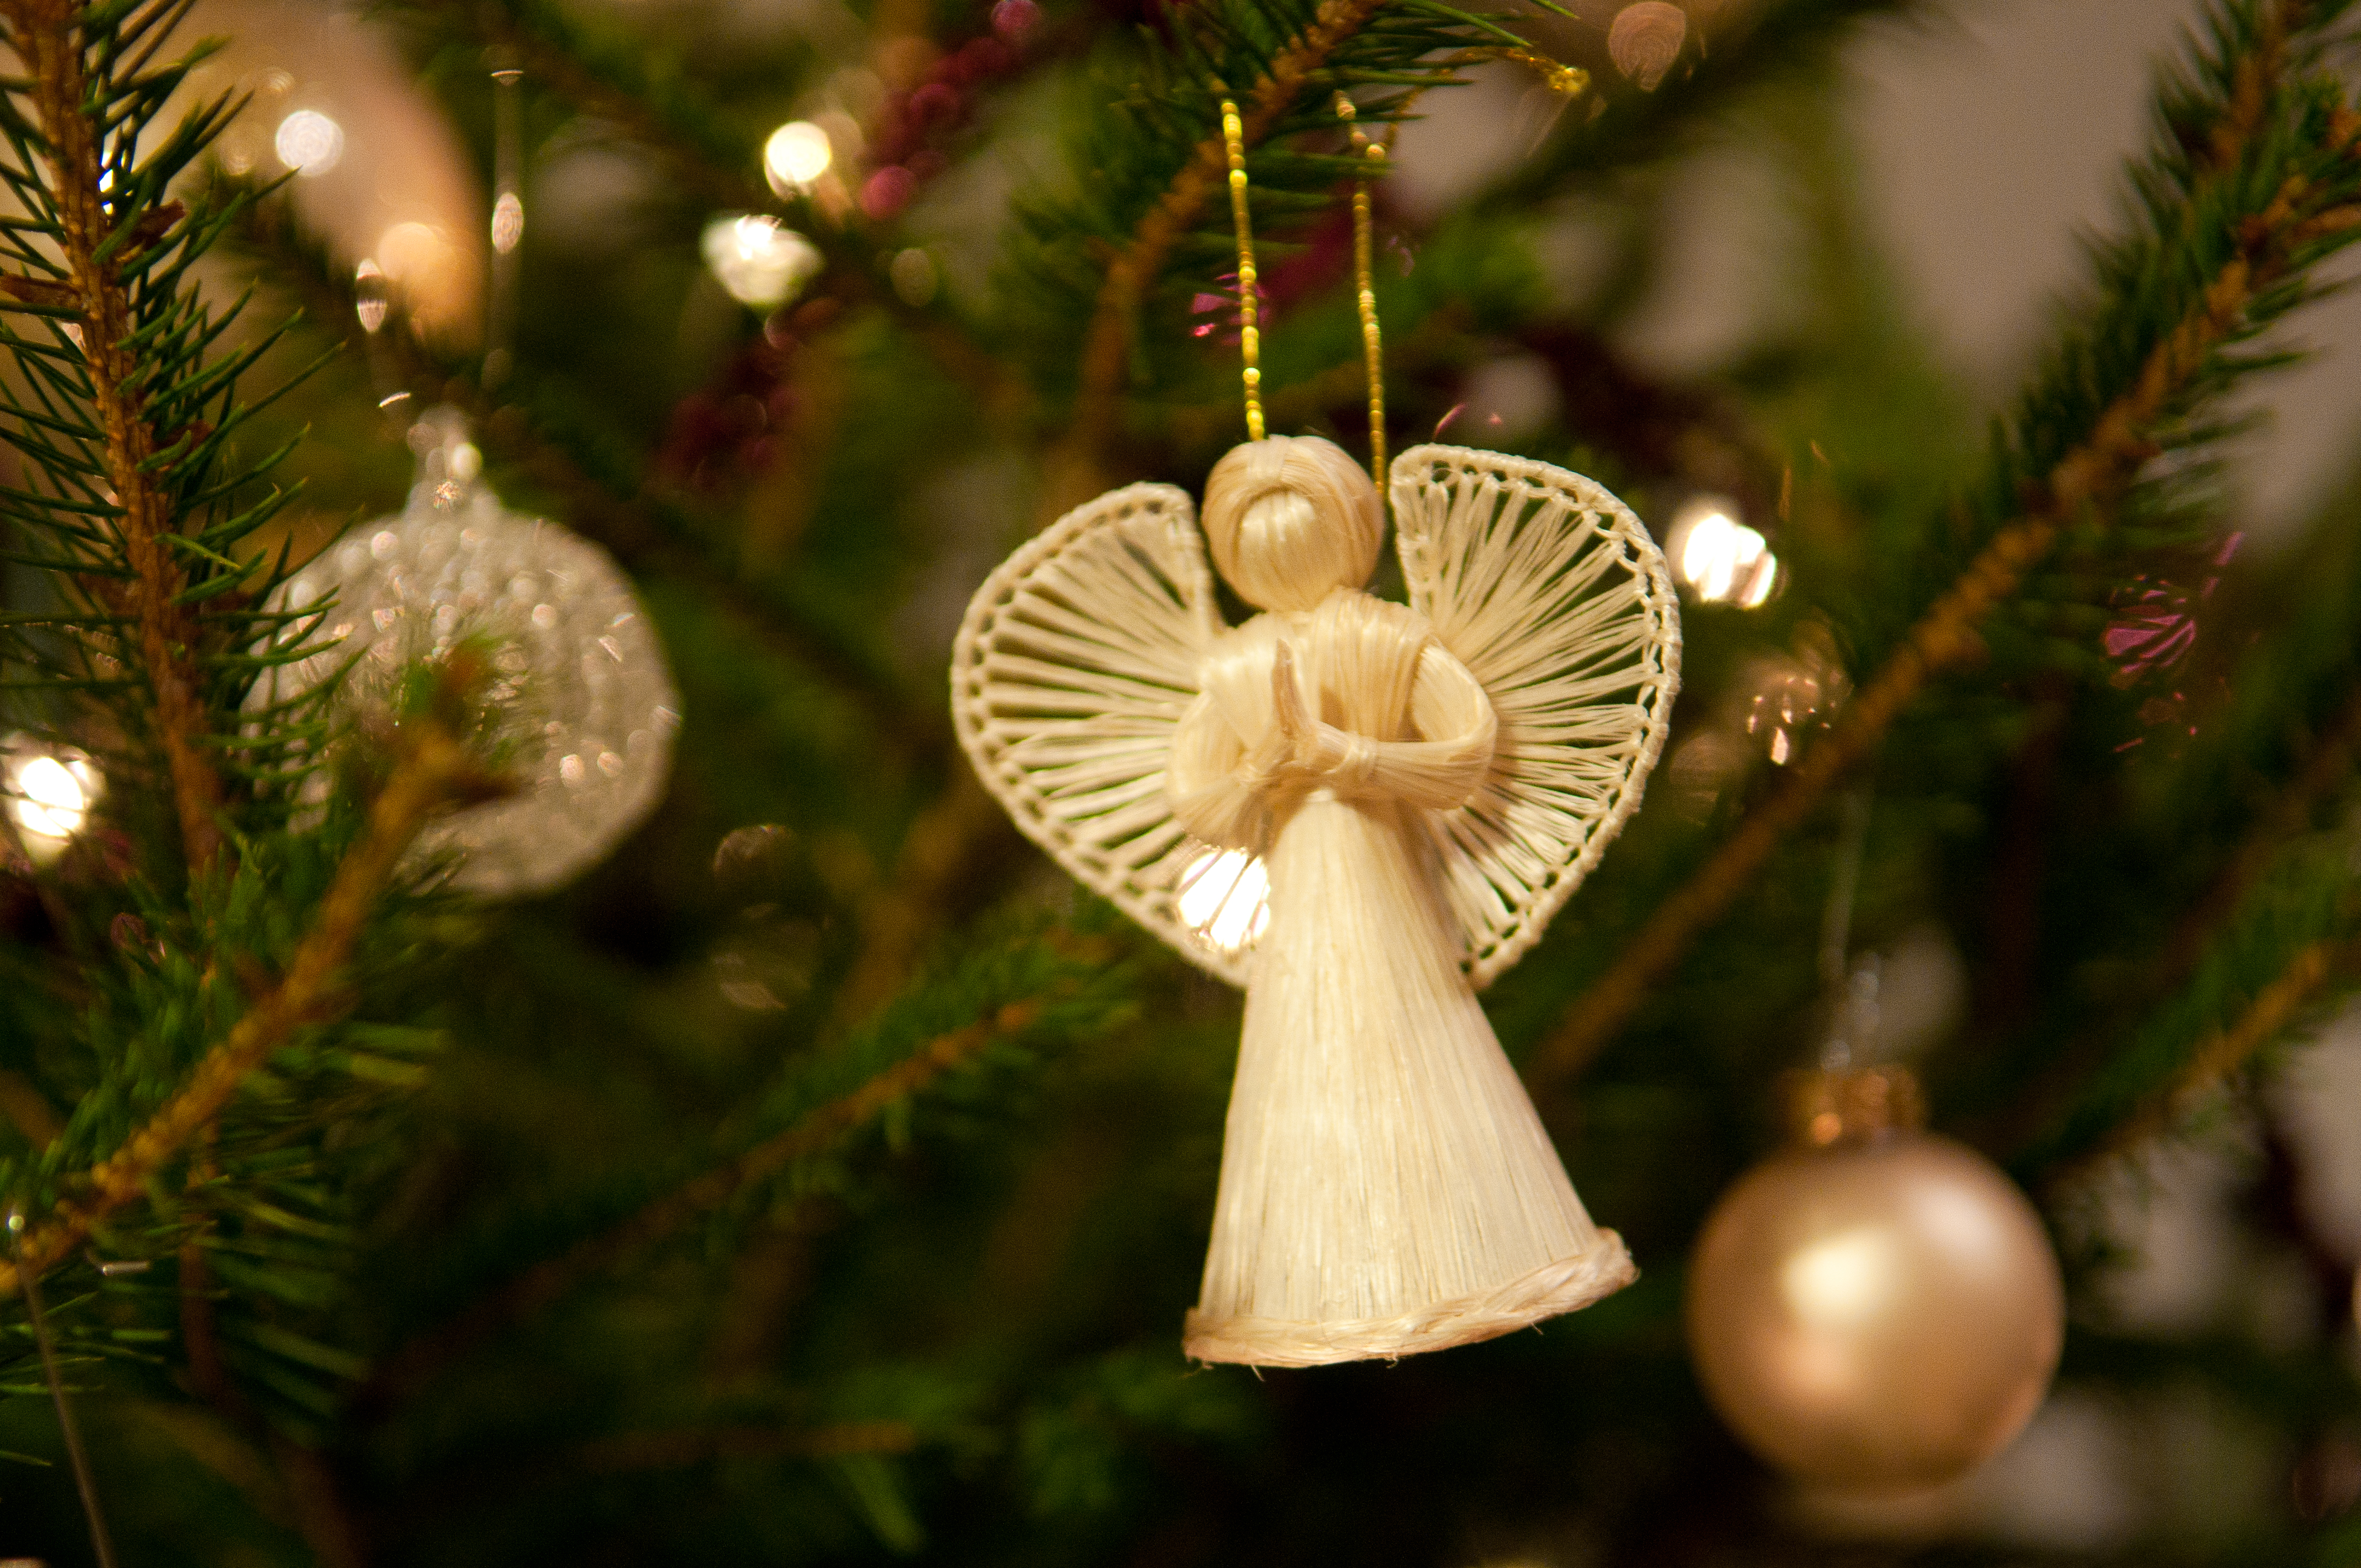 File:Angel on a Christmas tree (5274608959).jpg - Wikimedia Commons